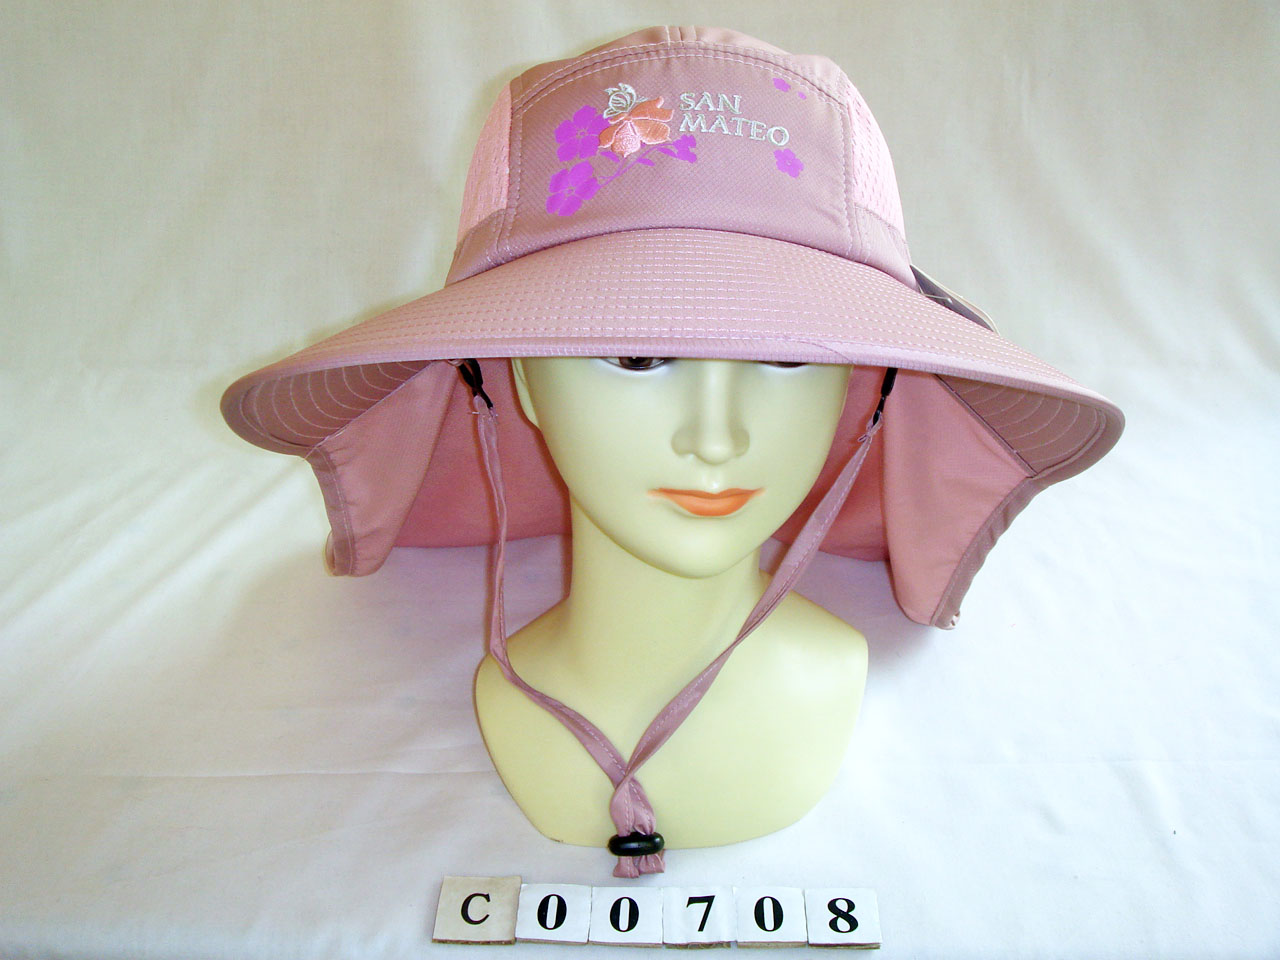 CO0708 粉紫 豆沙 固定式後披 無前披 格子布五片式休閒帽 電繡花與SAN MATEO 三星製帽